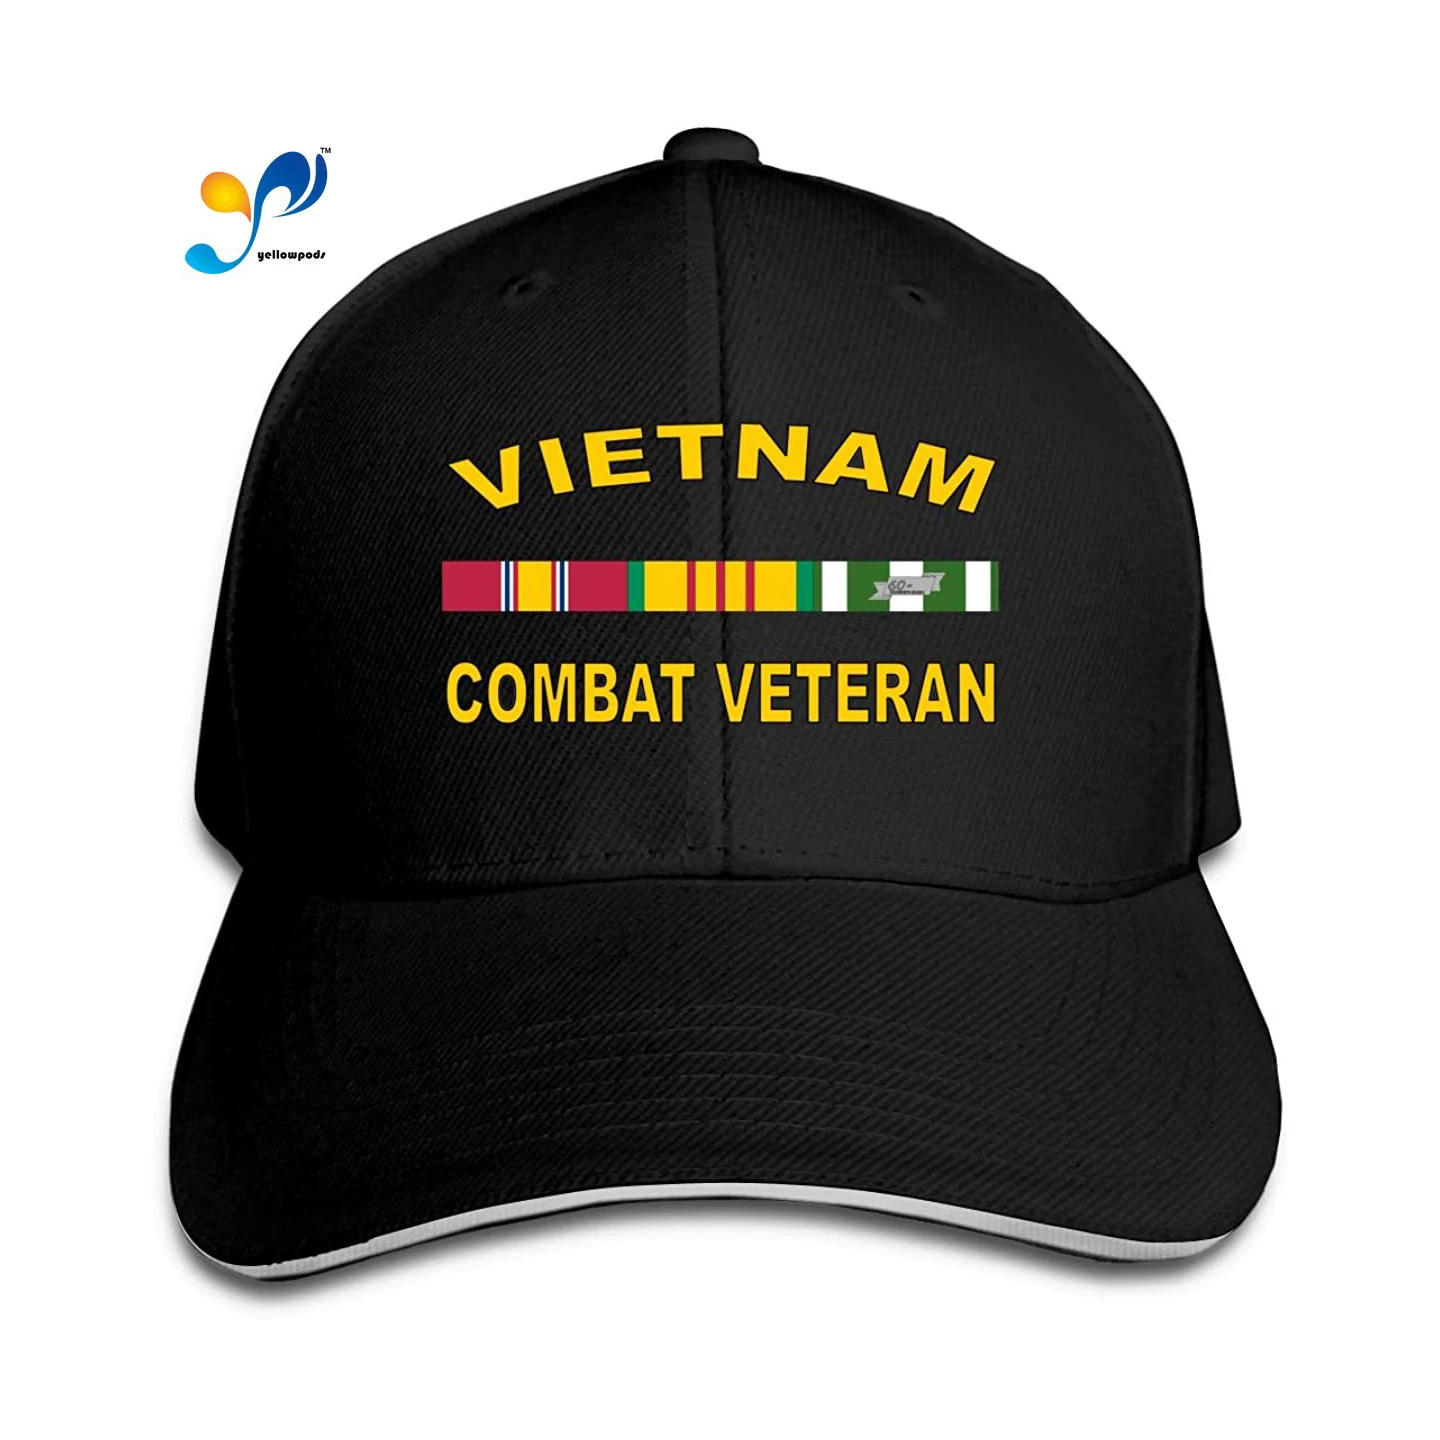 

Moto Gp Baseball Cap For Men Women SL6NNG Women's Boy's Fashion Pointed Cap Hunting Cap Vietnam Veteran Dropshipping